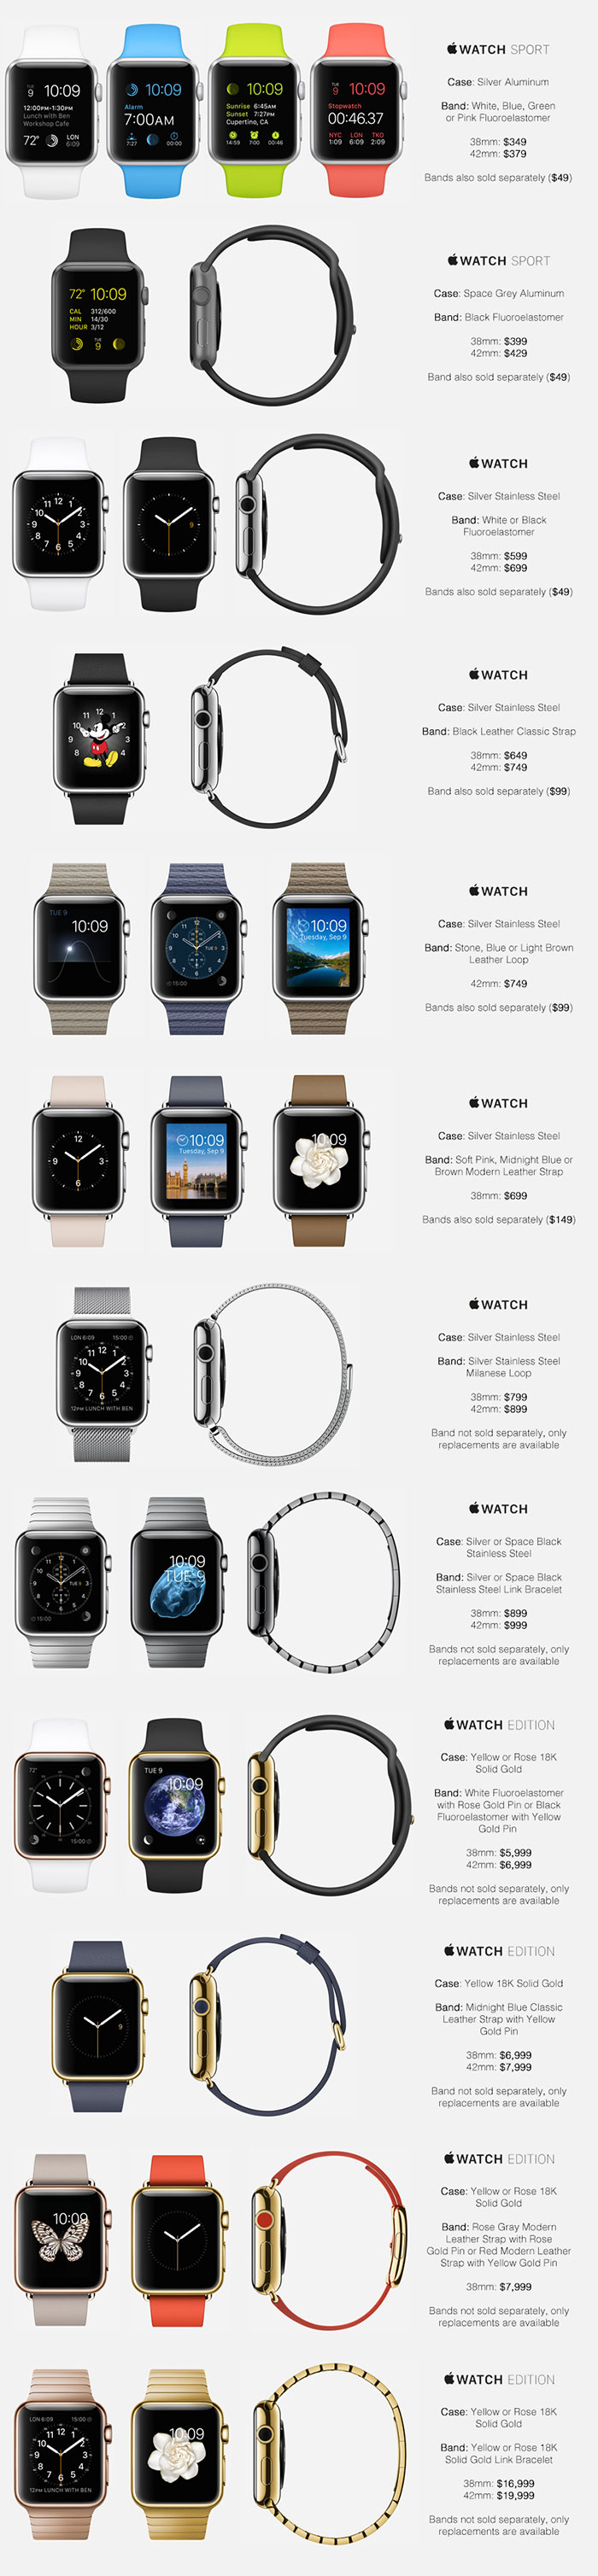 apple-watch-preise.jpg